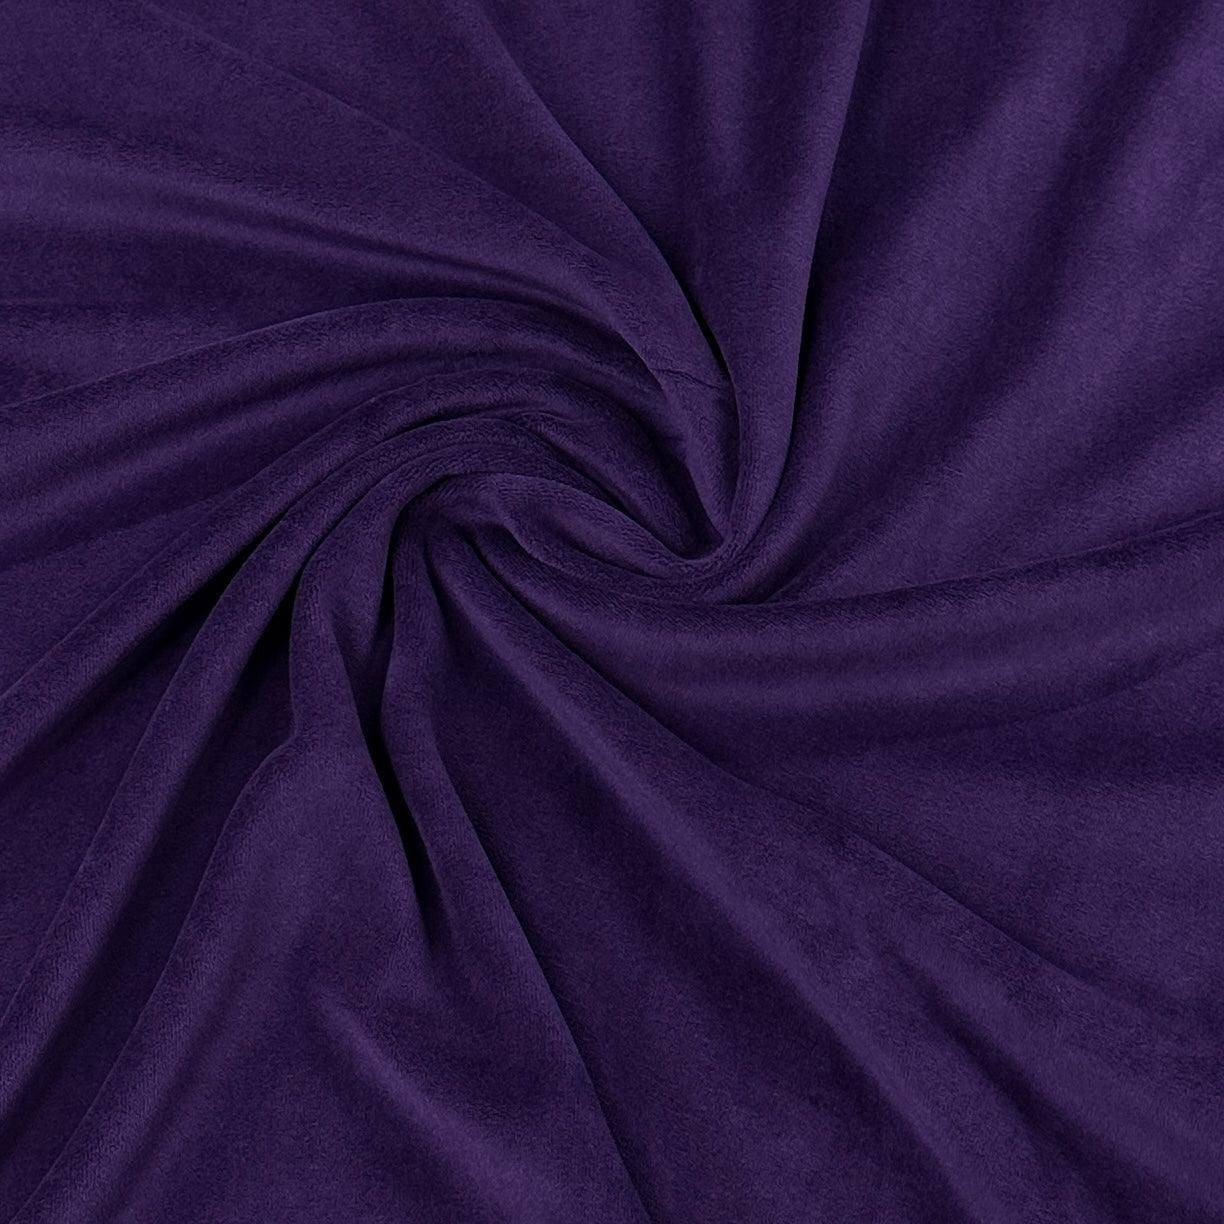 Amethyst Organic Cotton Velour Fabric, $8.59/yd - Rolls - Nature's Fabrics